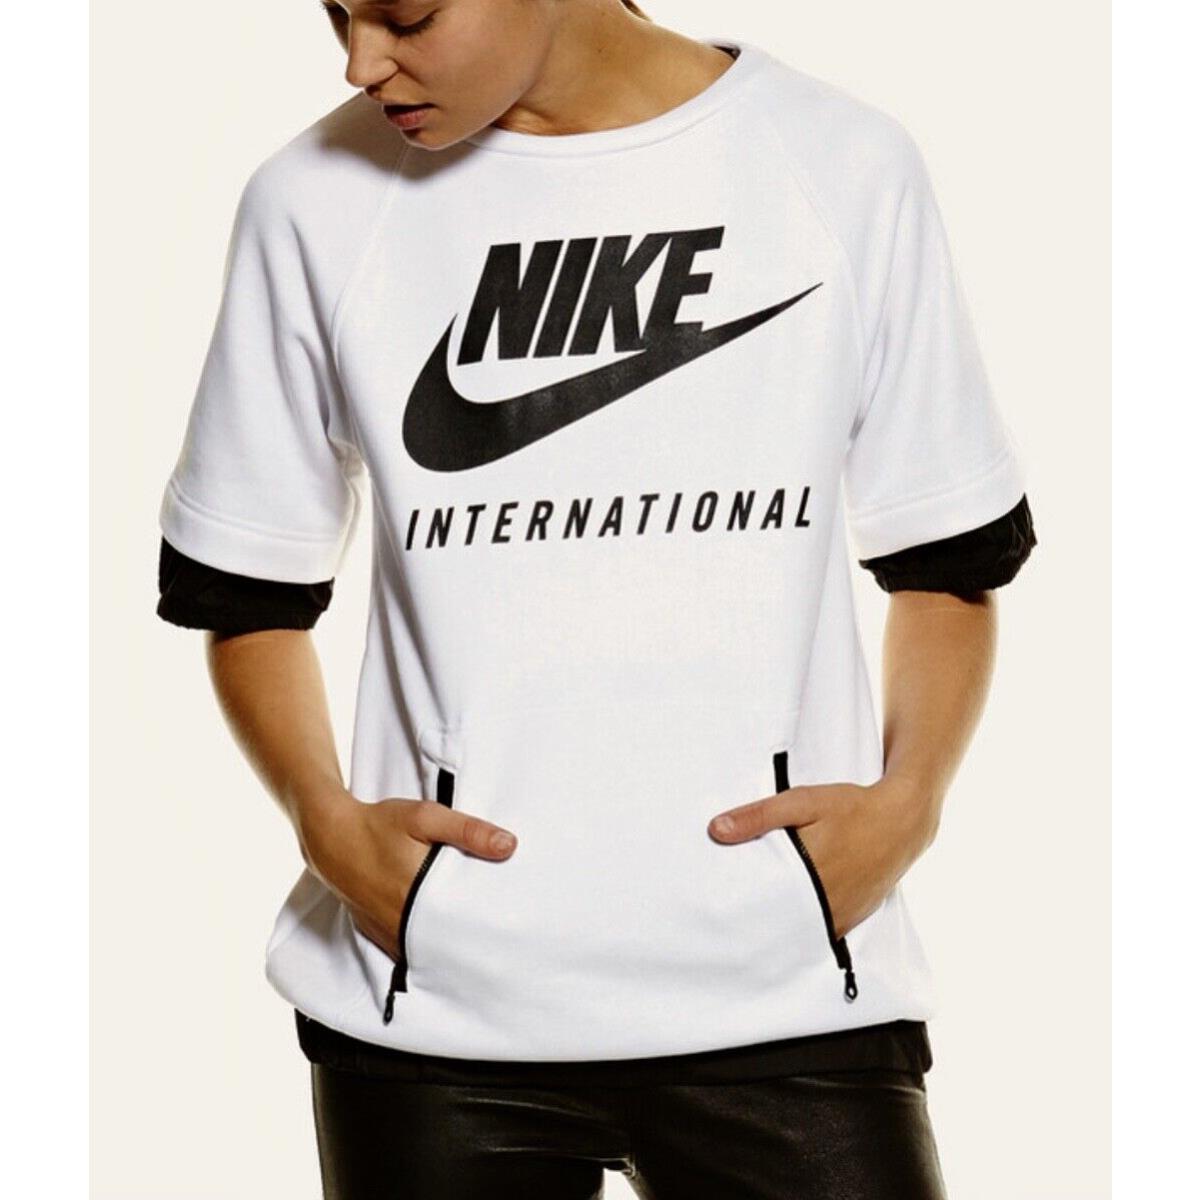 Nike International Short Sleeve White Black Sweatshirt Top Womens Sz XS